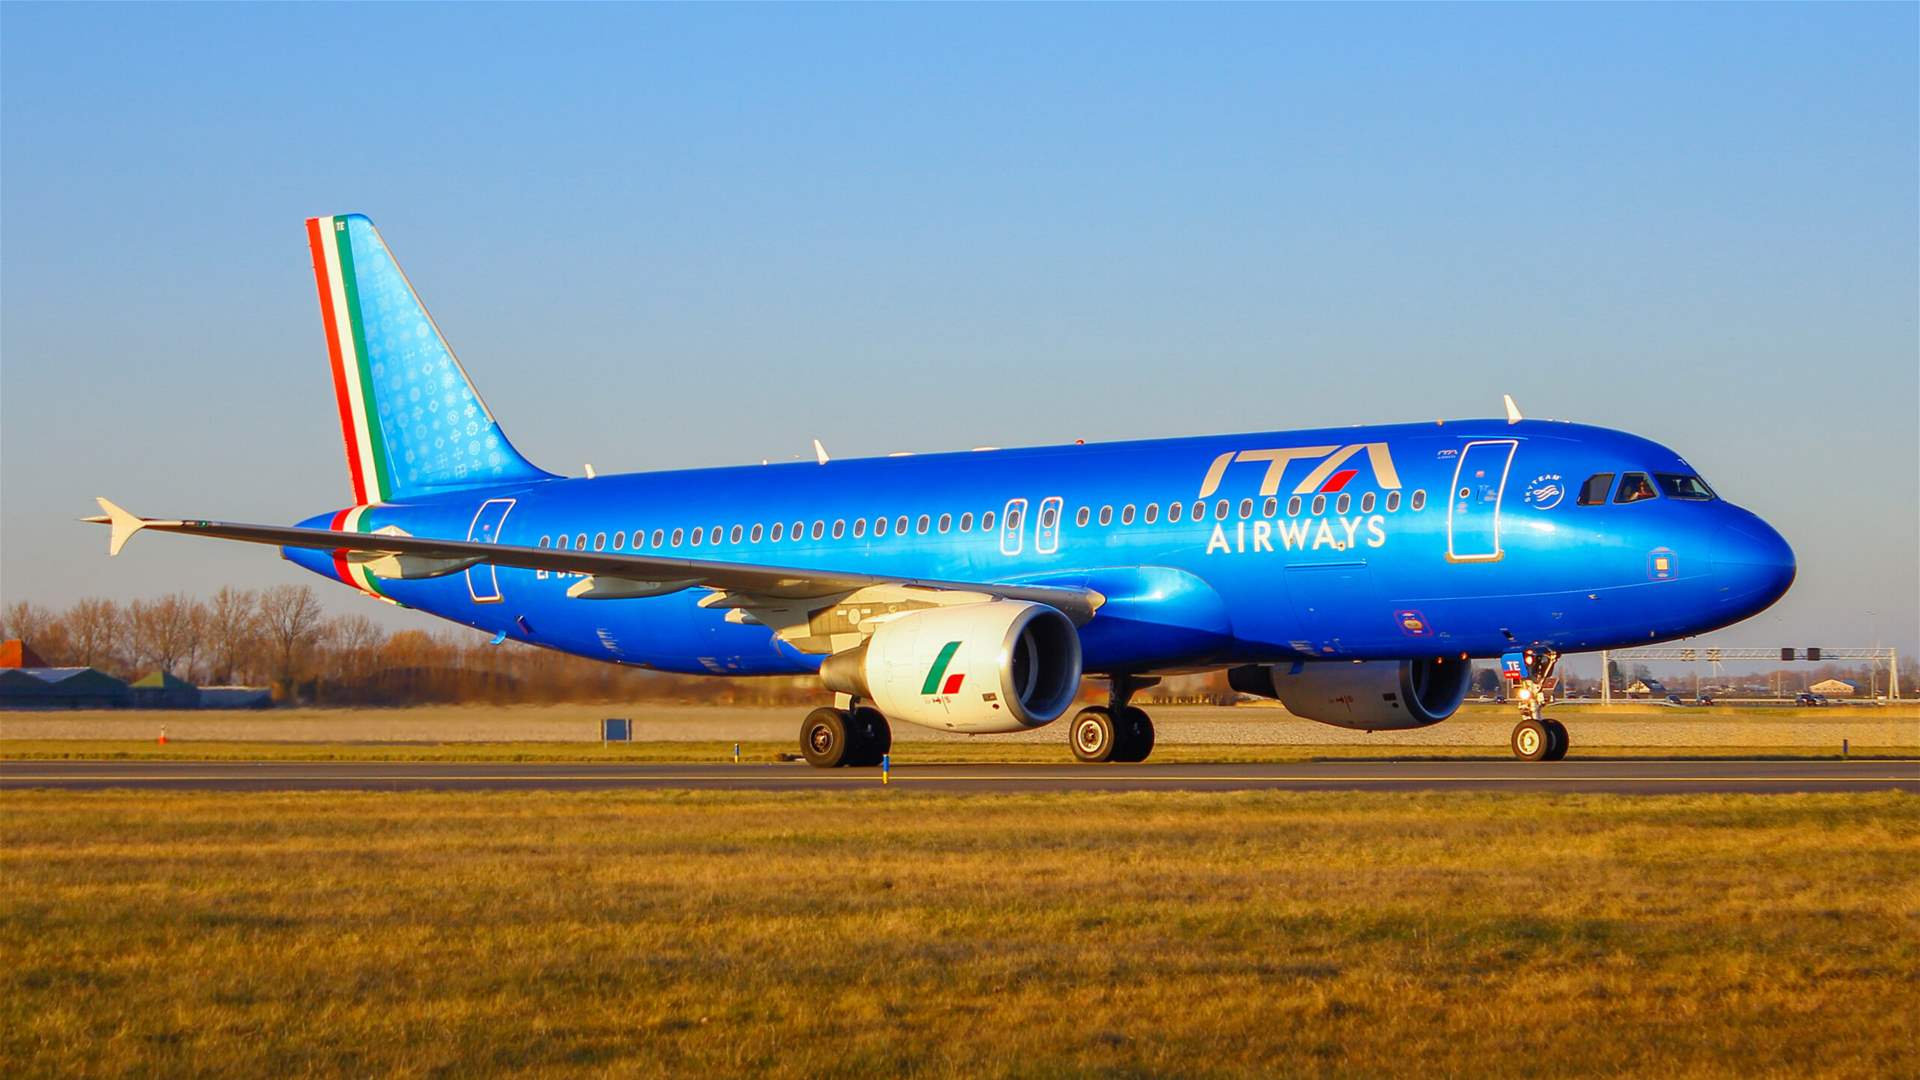 ITA Airways suspends flights to and from Tel Aviv until Aug. 6